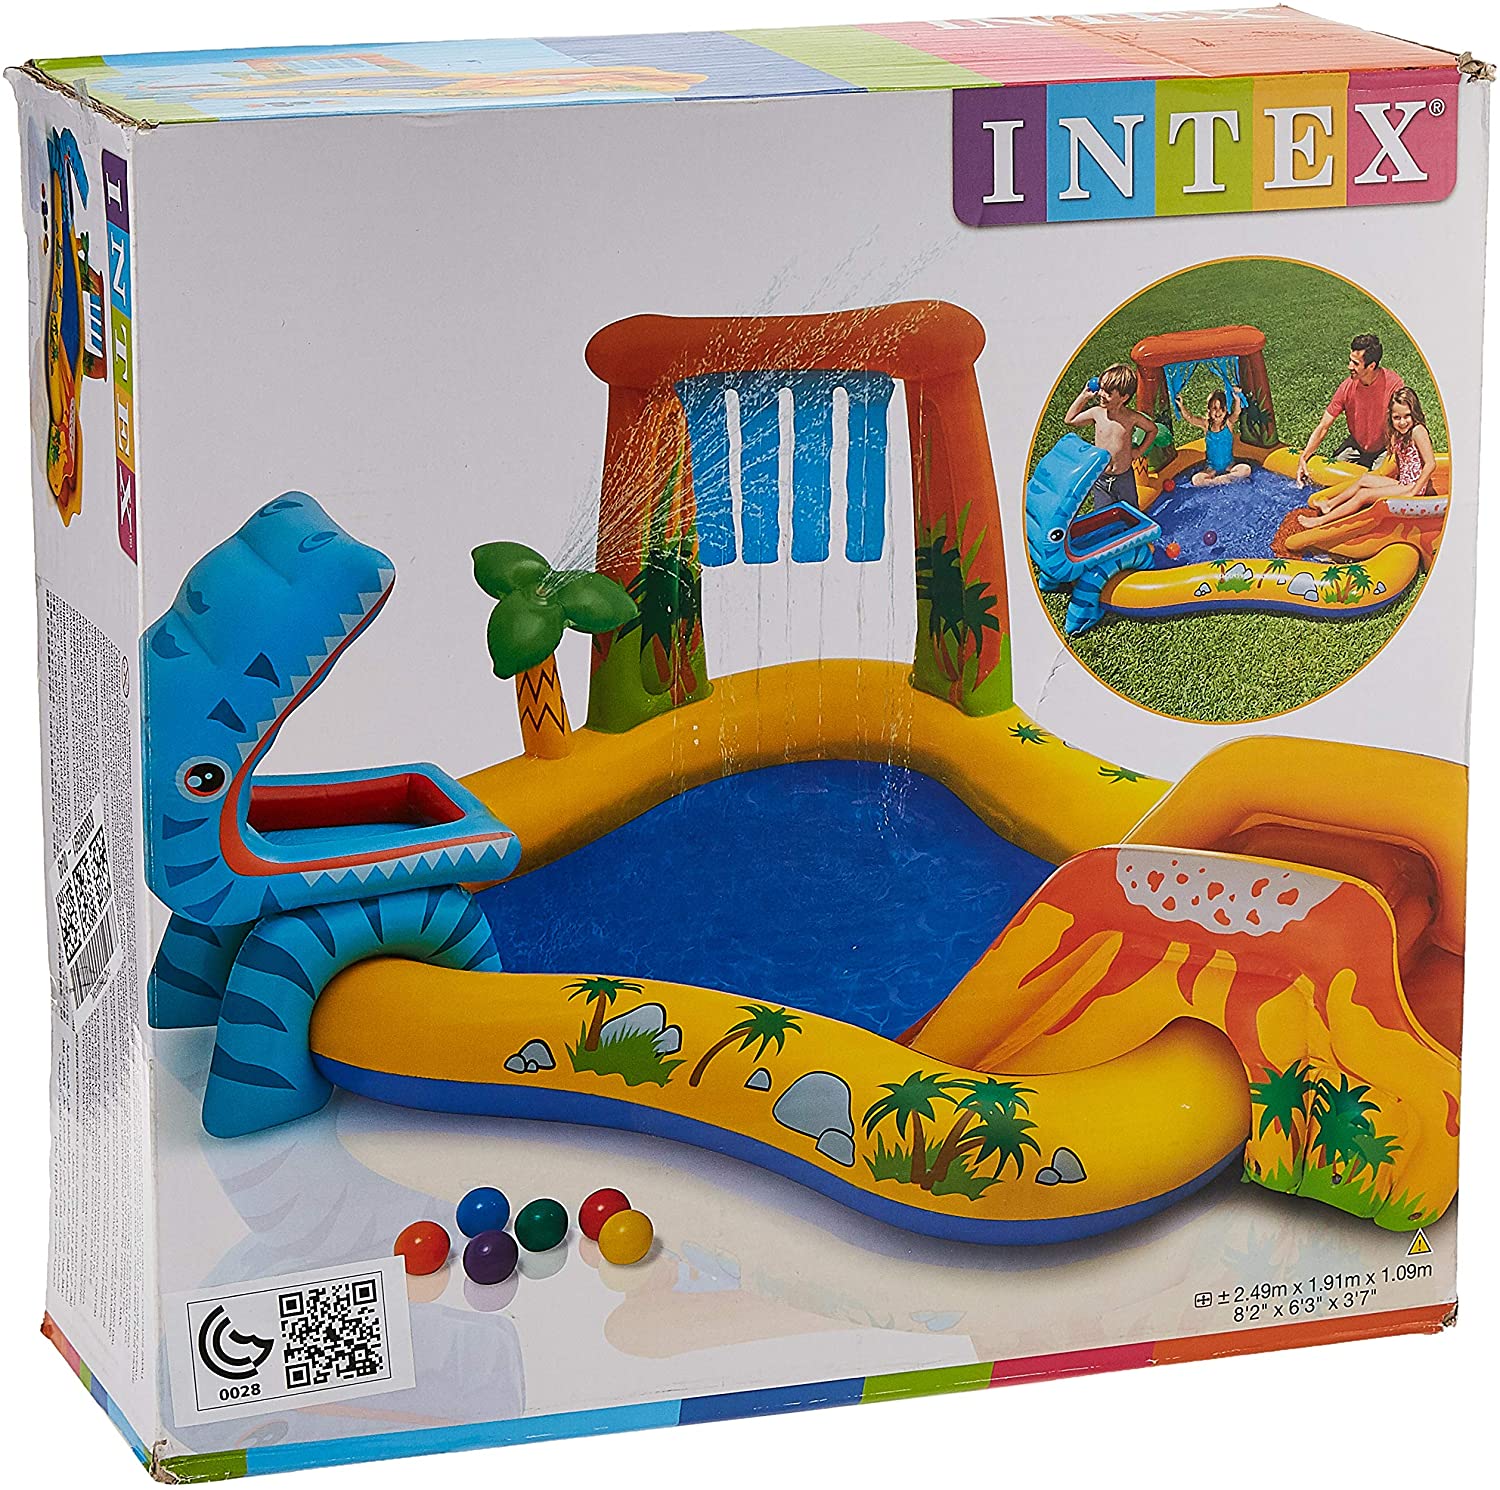 INTEX Dino Play Pool For Children